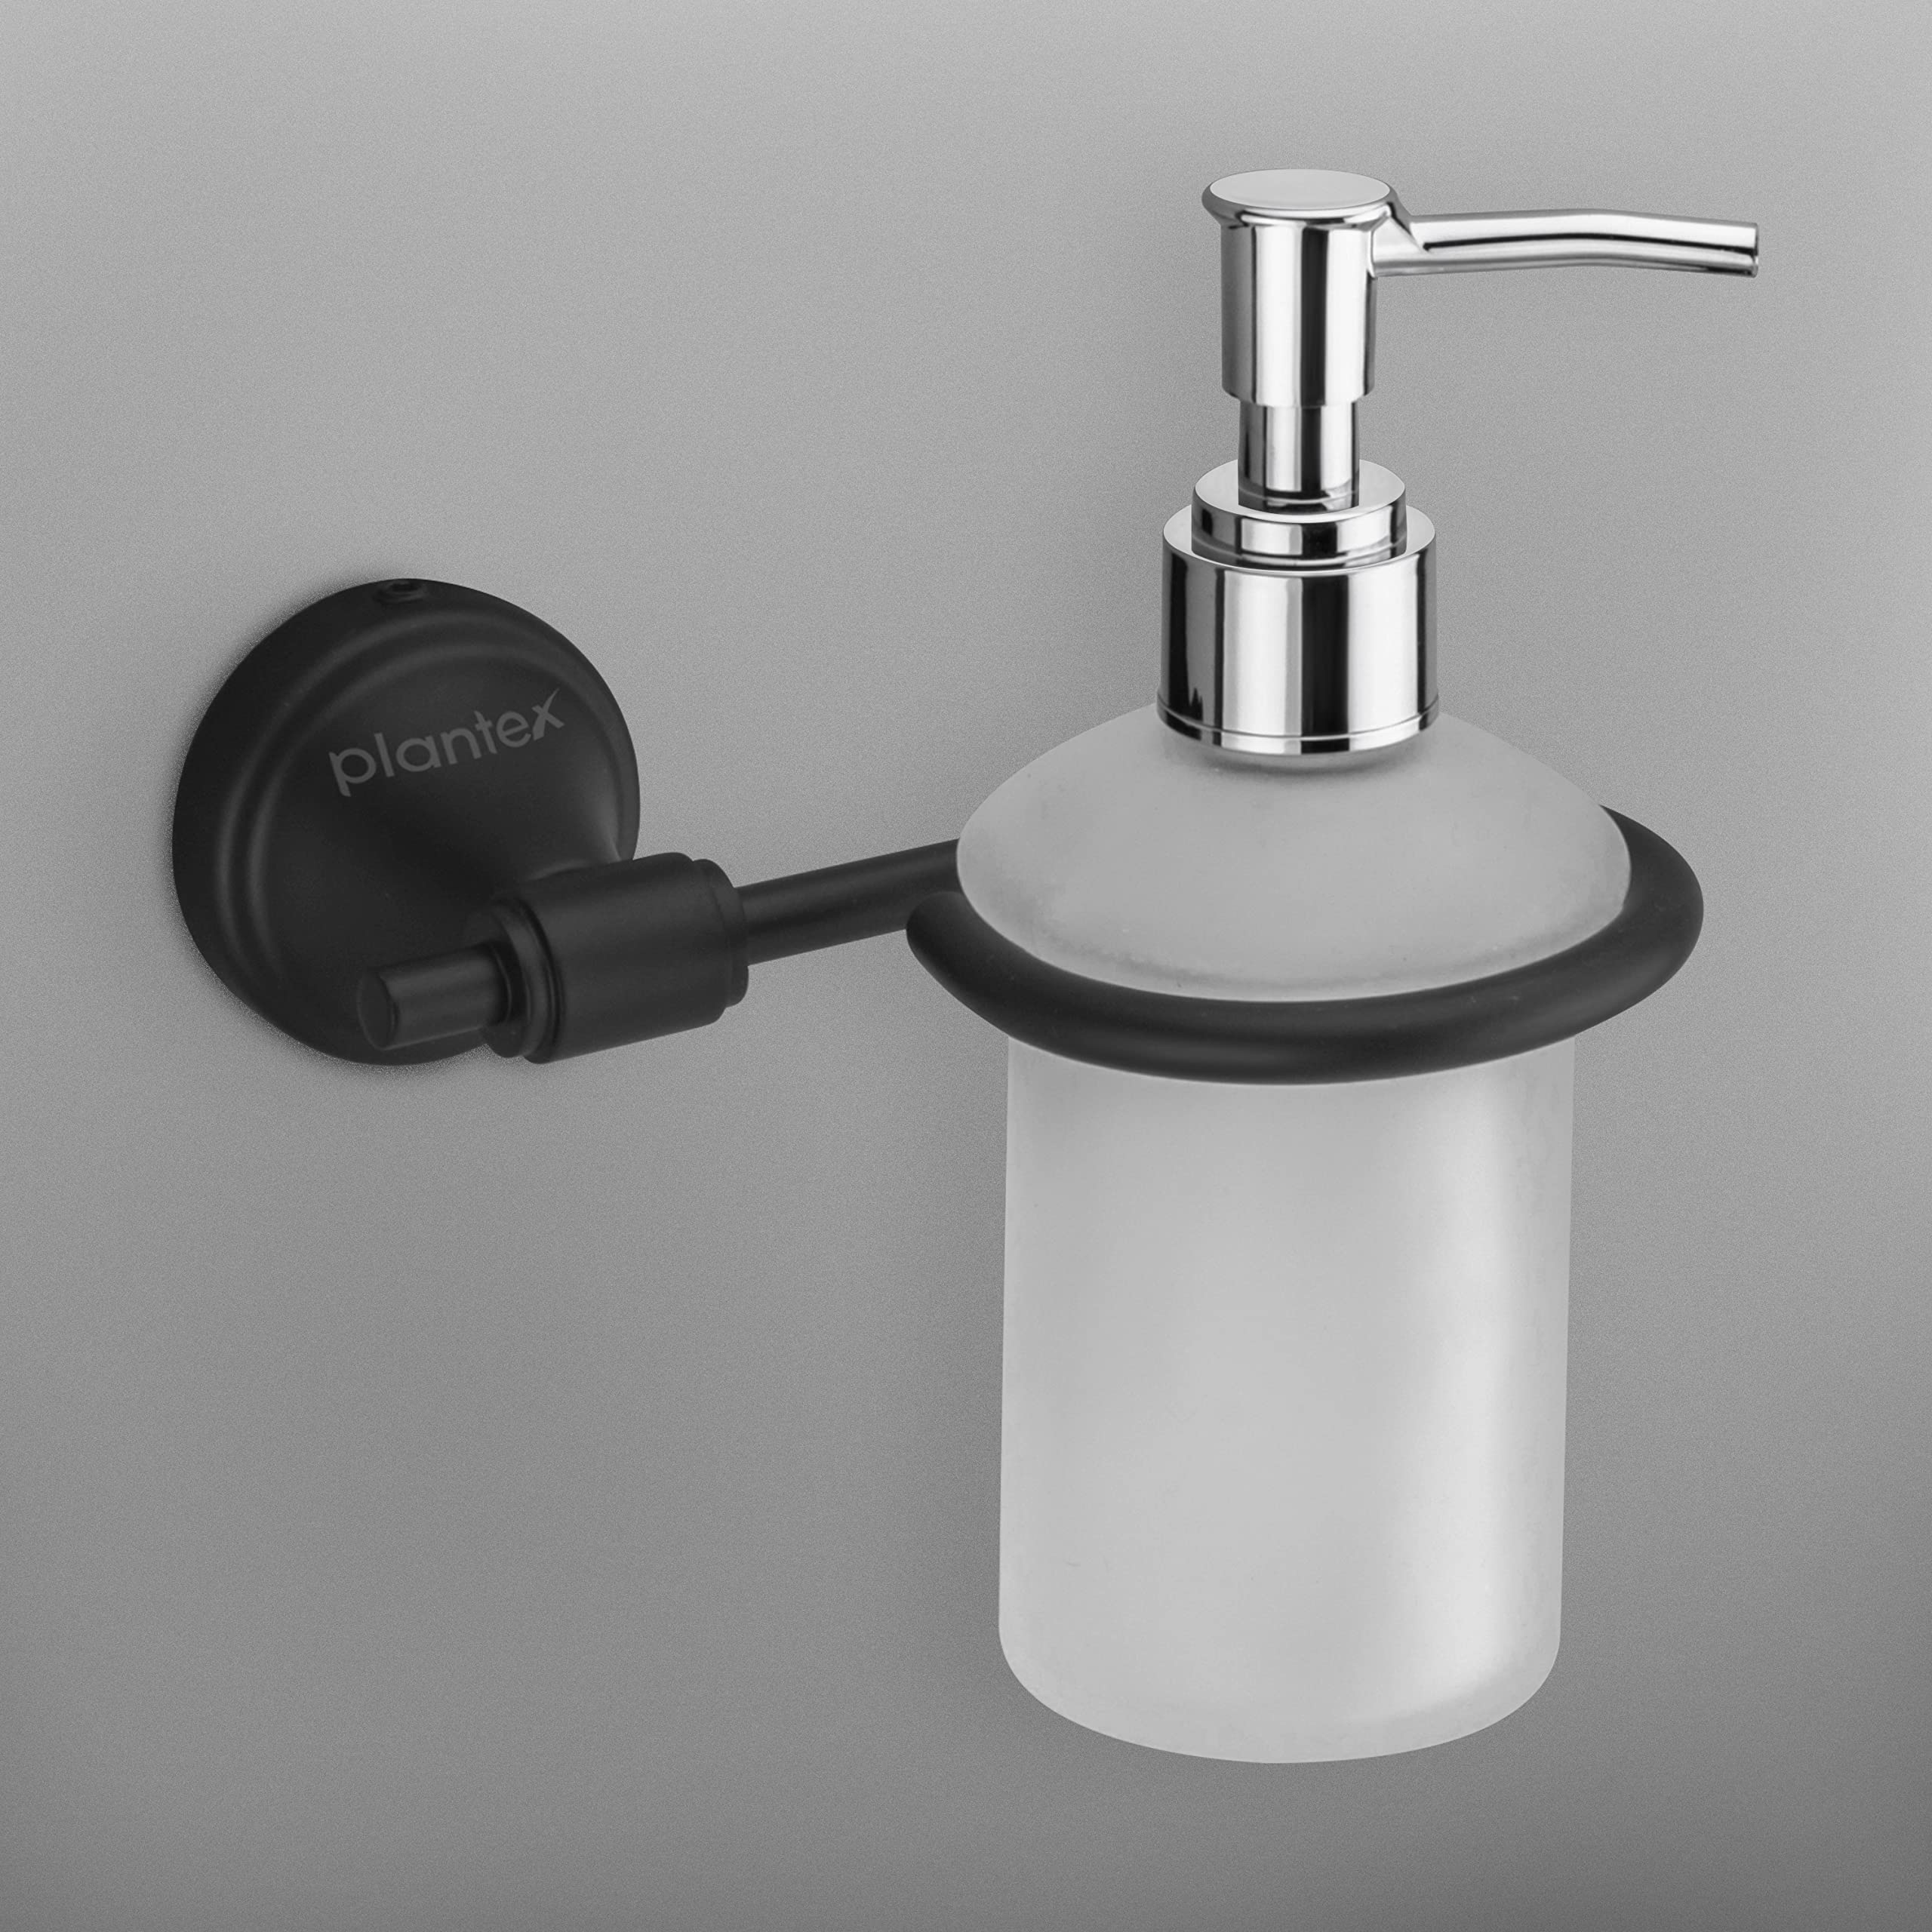 Plantex Niko Black Hand wash Holder for wash Basin Liquid soap Dispenser - 304 Stainless Steel